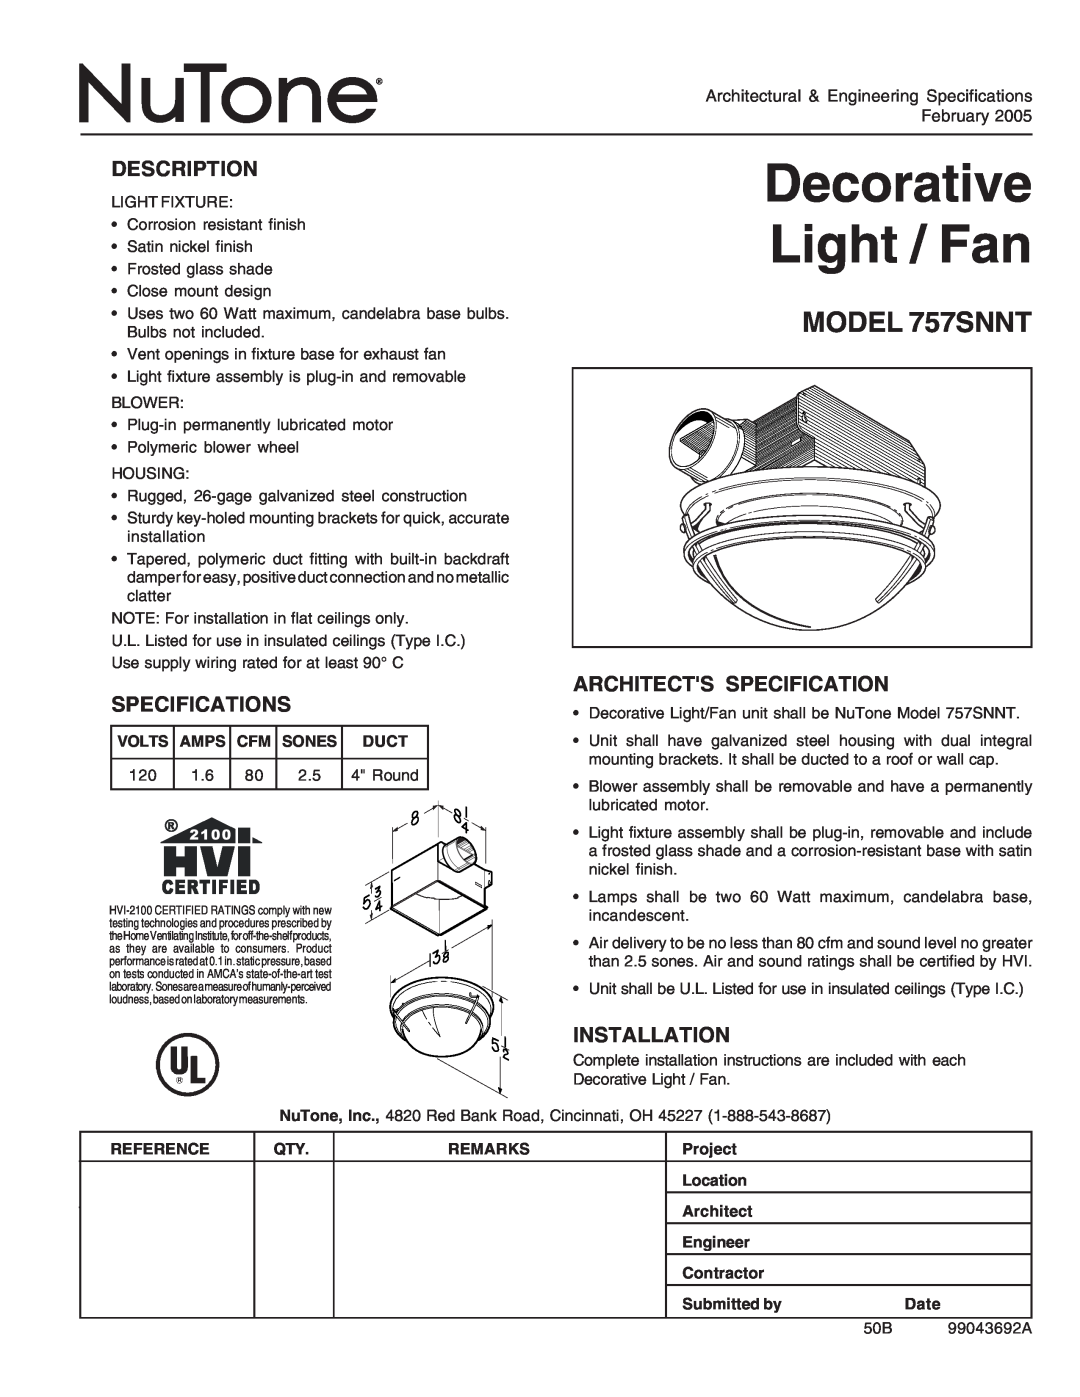 NuTone specifications Decorative Light / Fan, MODEL 757SNNT, Description, Specifications, Architects Specification 